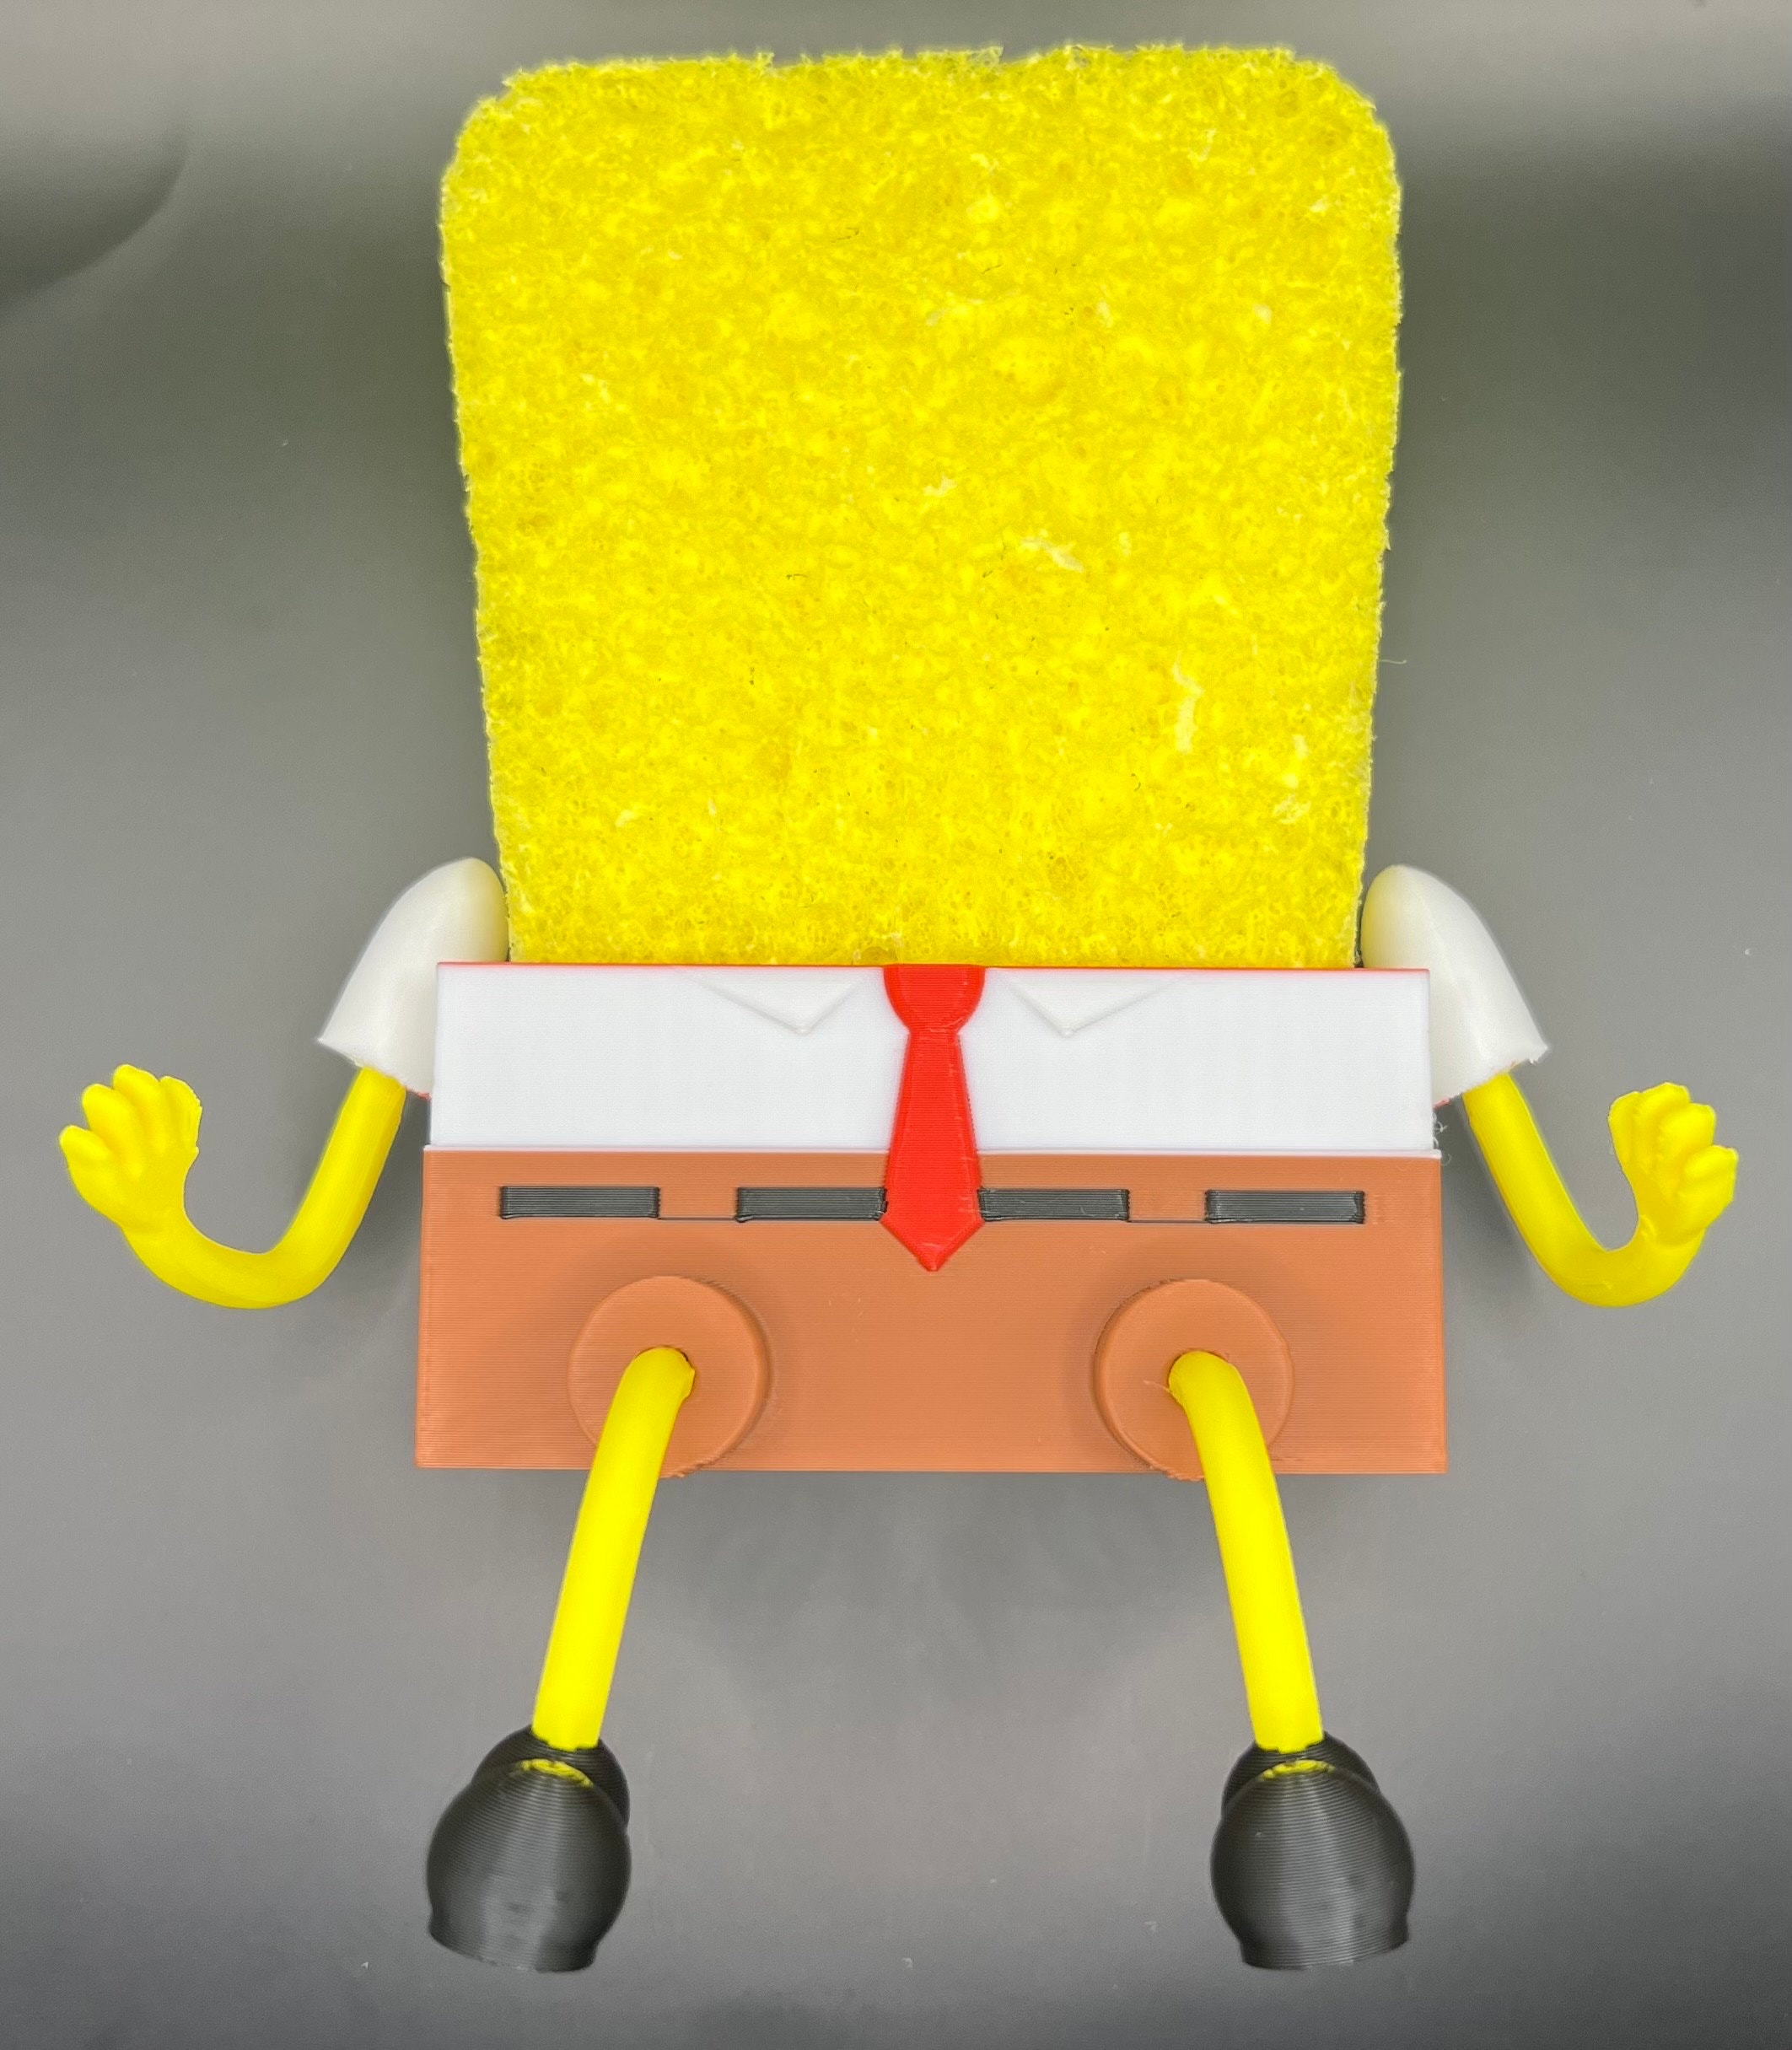 Vintage 2001 Big Sponge-bob Square-pants Toy Nickelodeon 